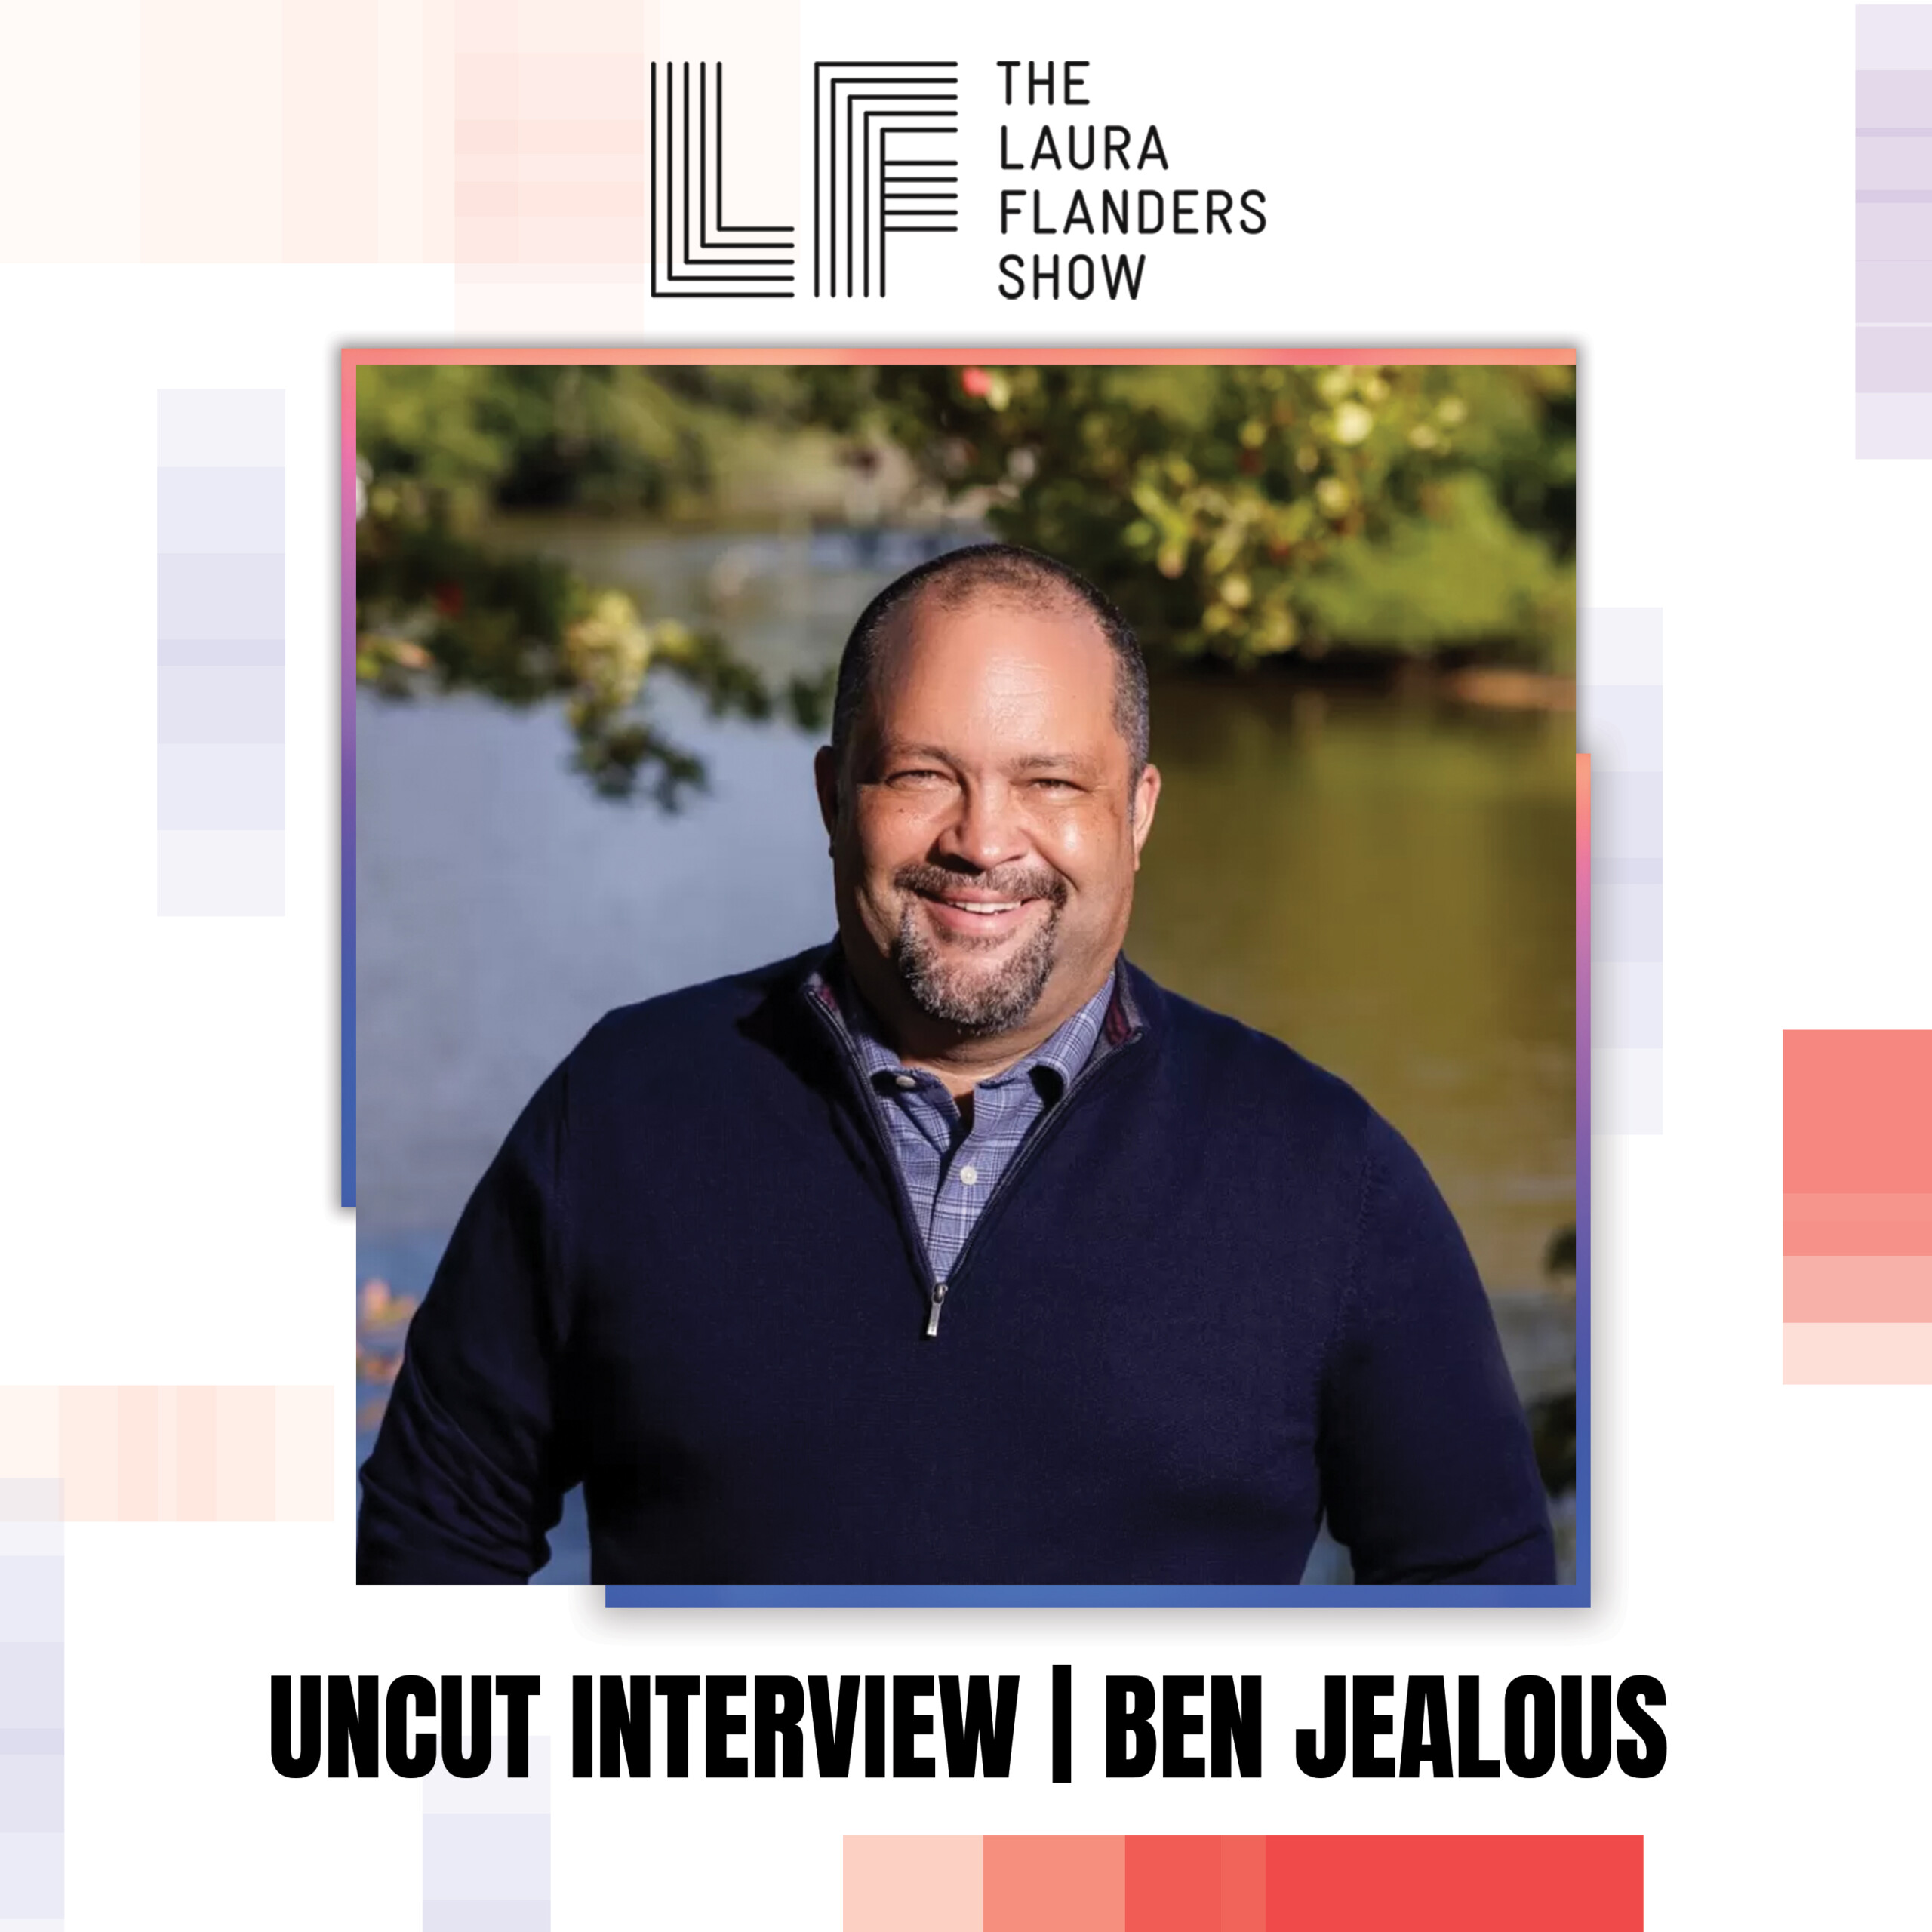 Photo of Ben Jealous with text: Uncut Interview